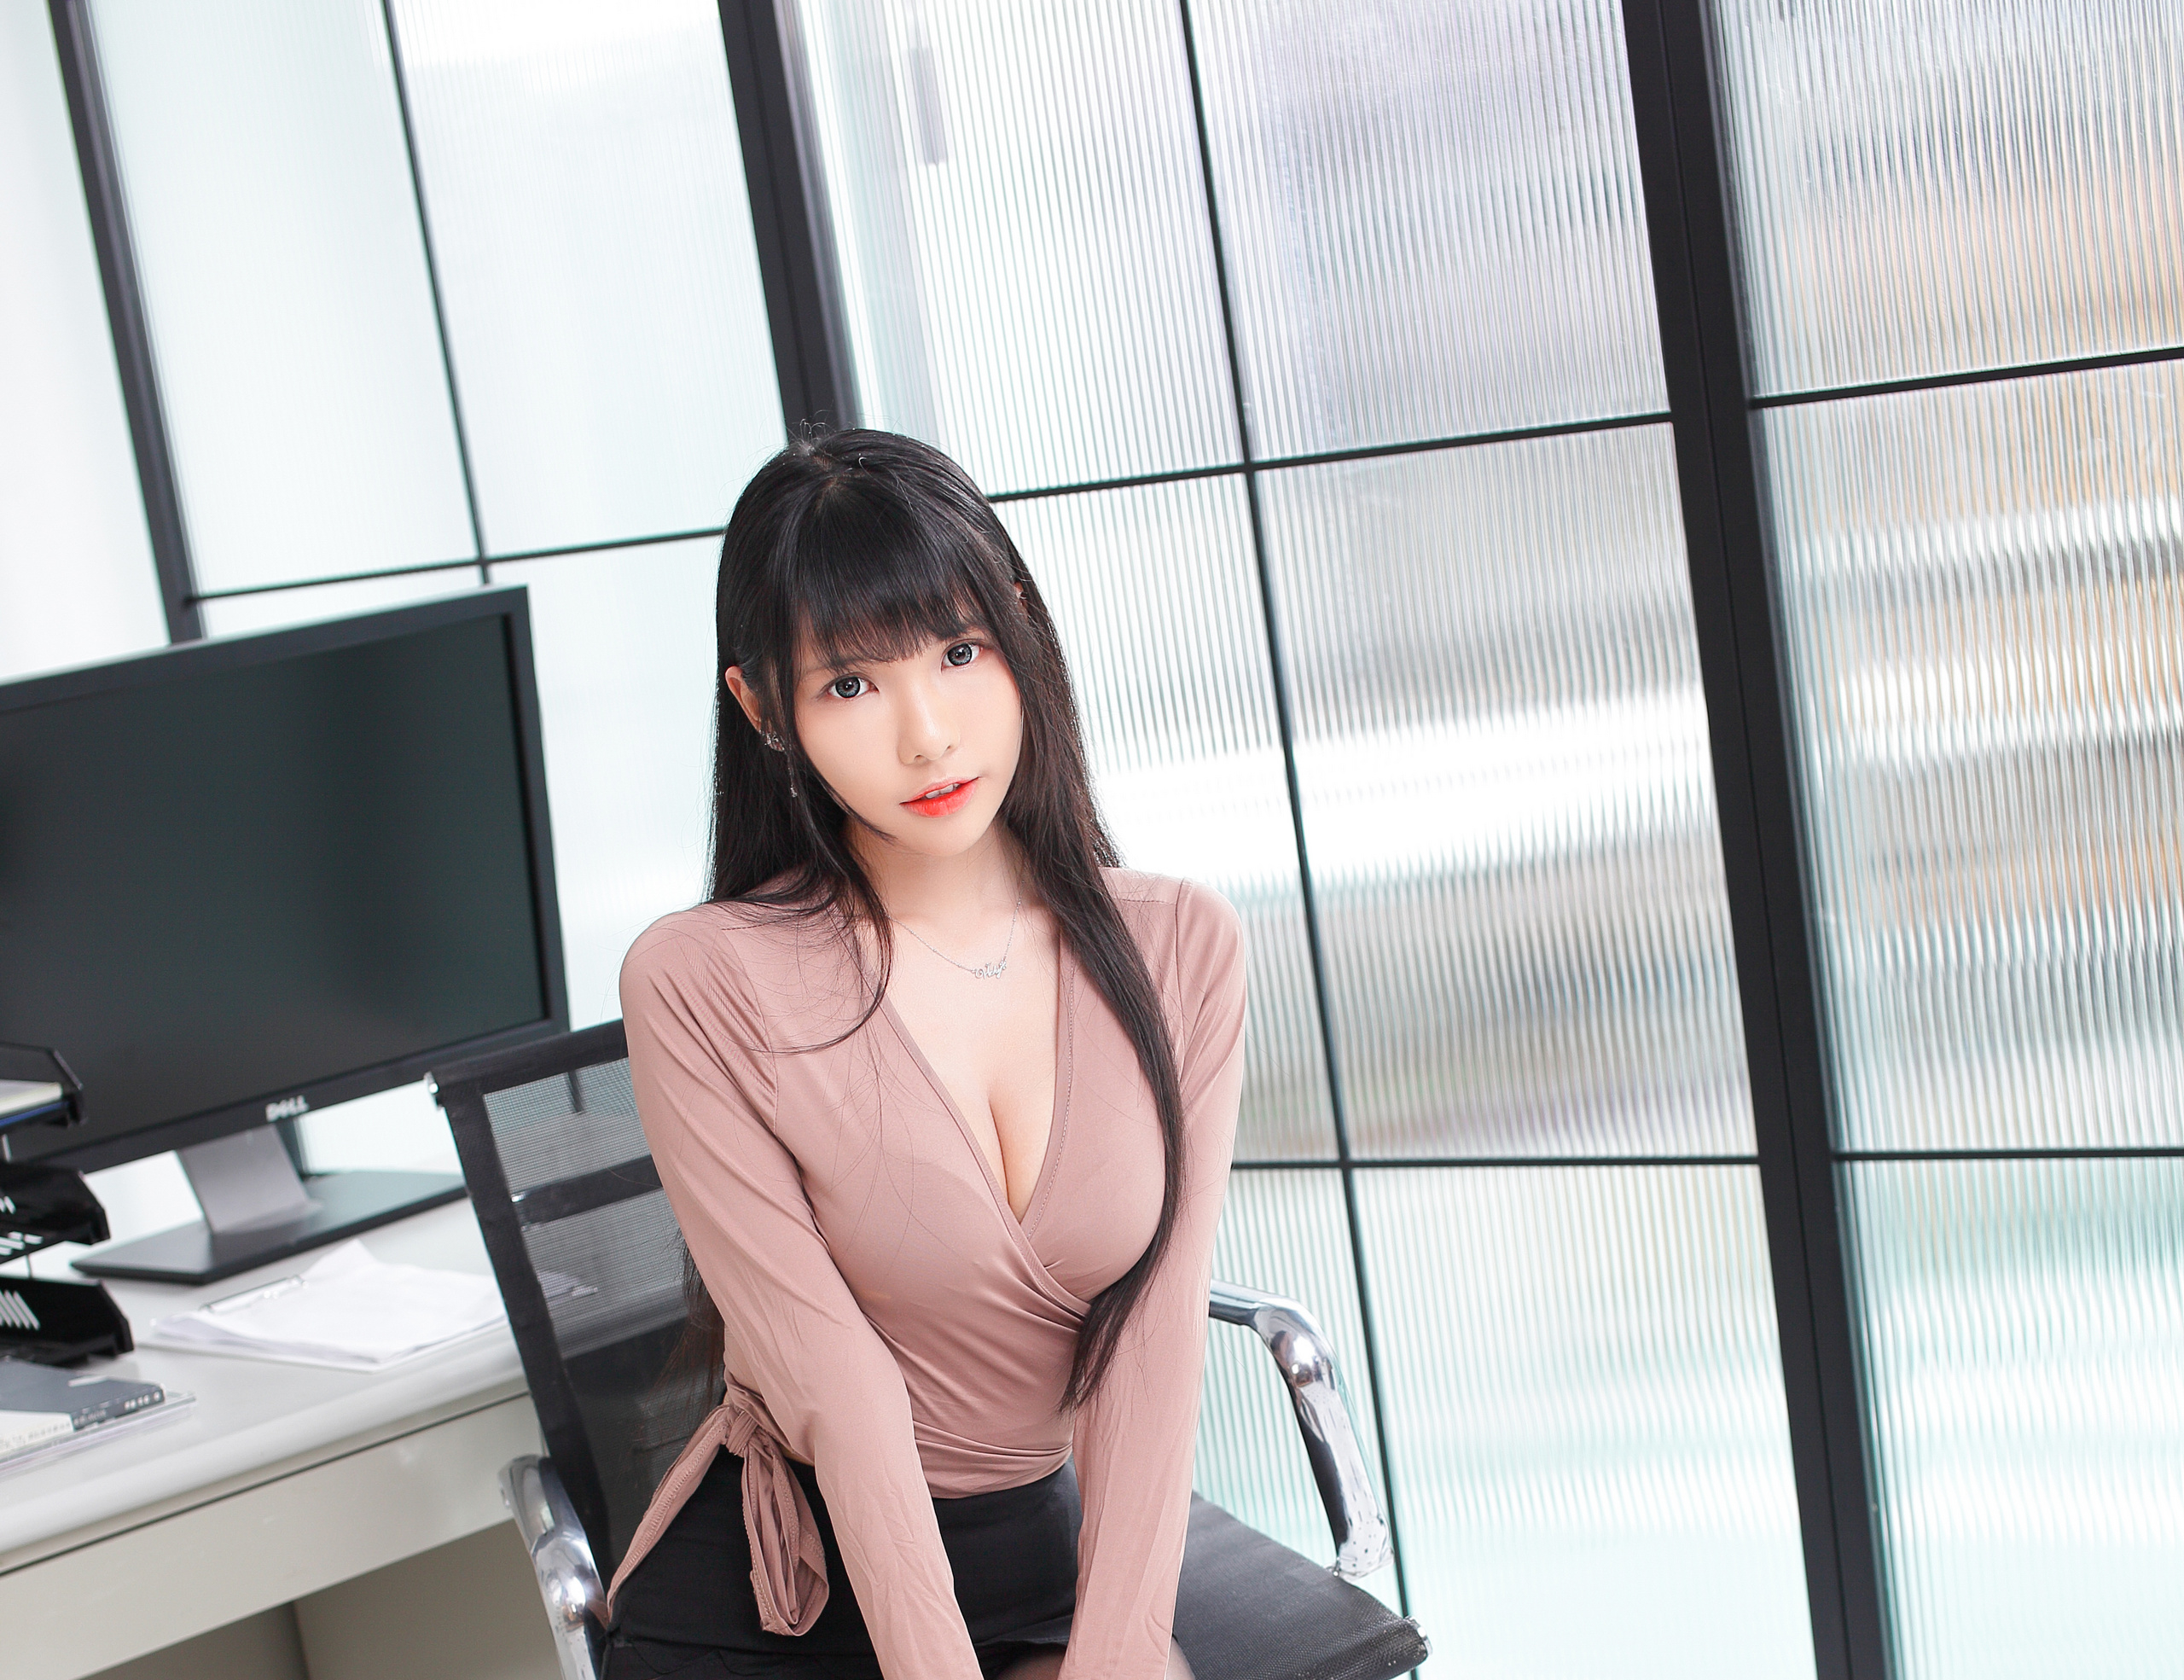 Asian Model Women Long Hair Brunette Vicky Sitting Chair Desk Computer Screen Shirt Window Looking A 2560x1969